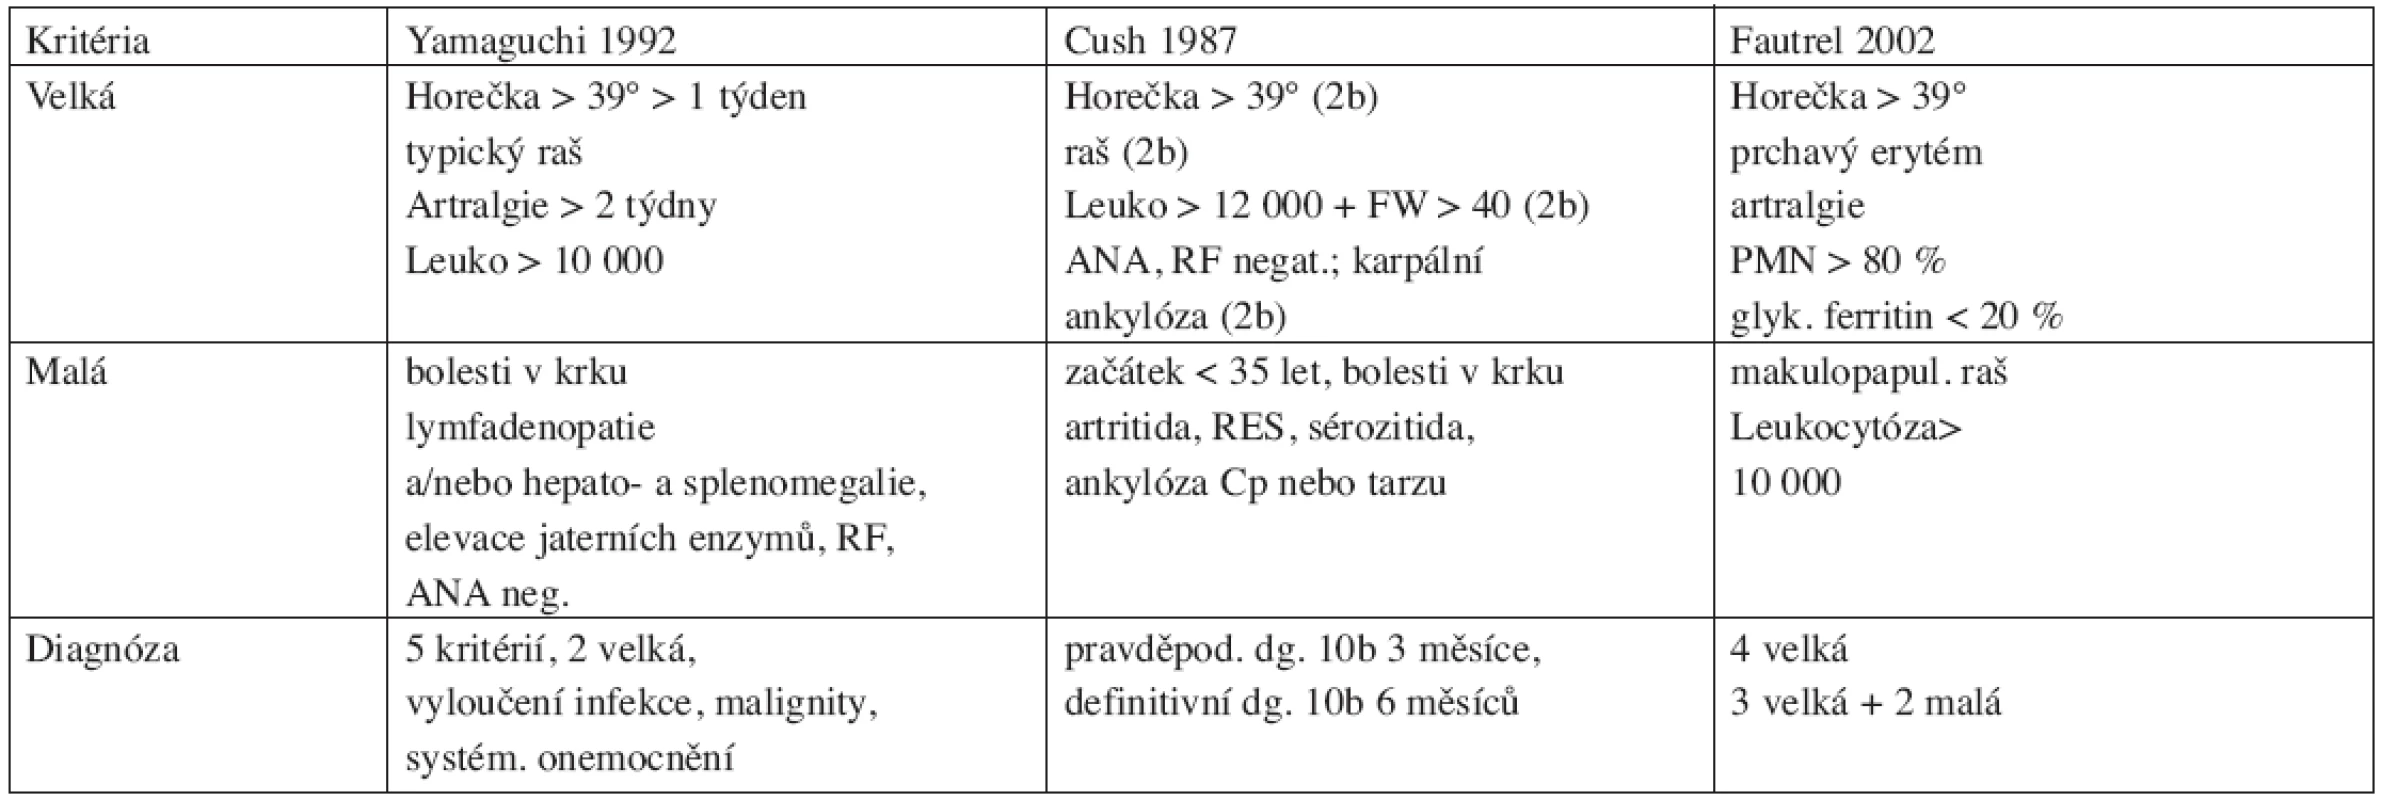 Diagnostická kritéria Stillovy nemoci (Yamaguchi M, Ohta A, Tsunematsu T, et al. Preliminary criteria for classification of adult Still's disease. J Rheumatol 1992; 19:424.)